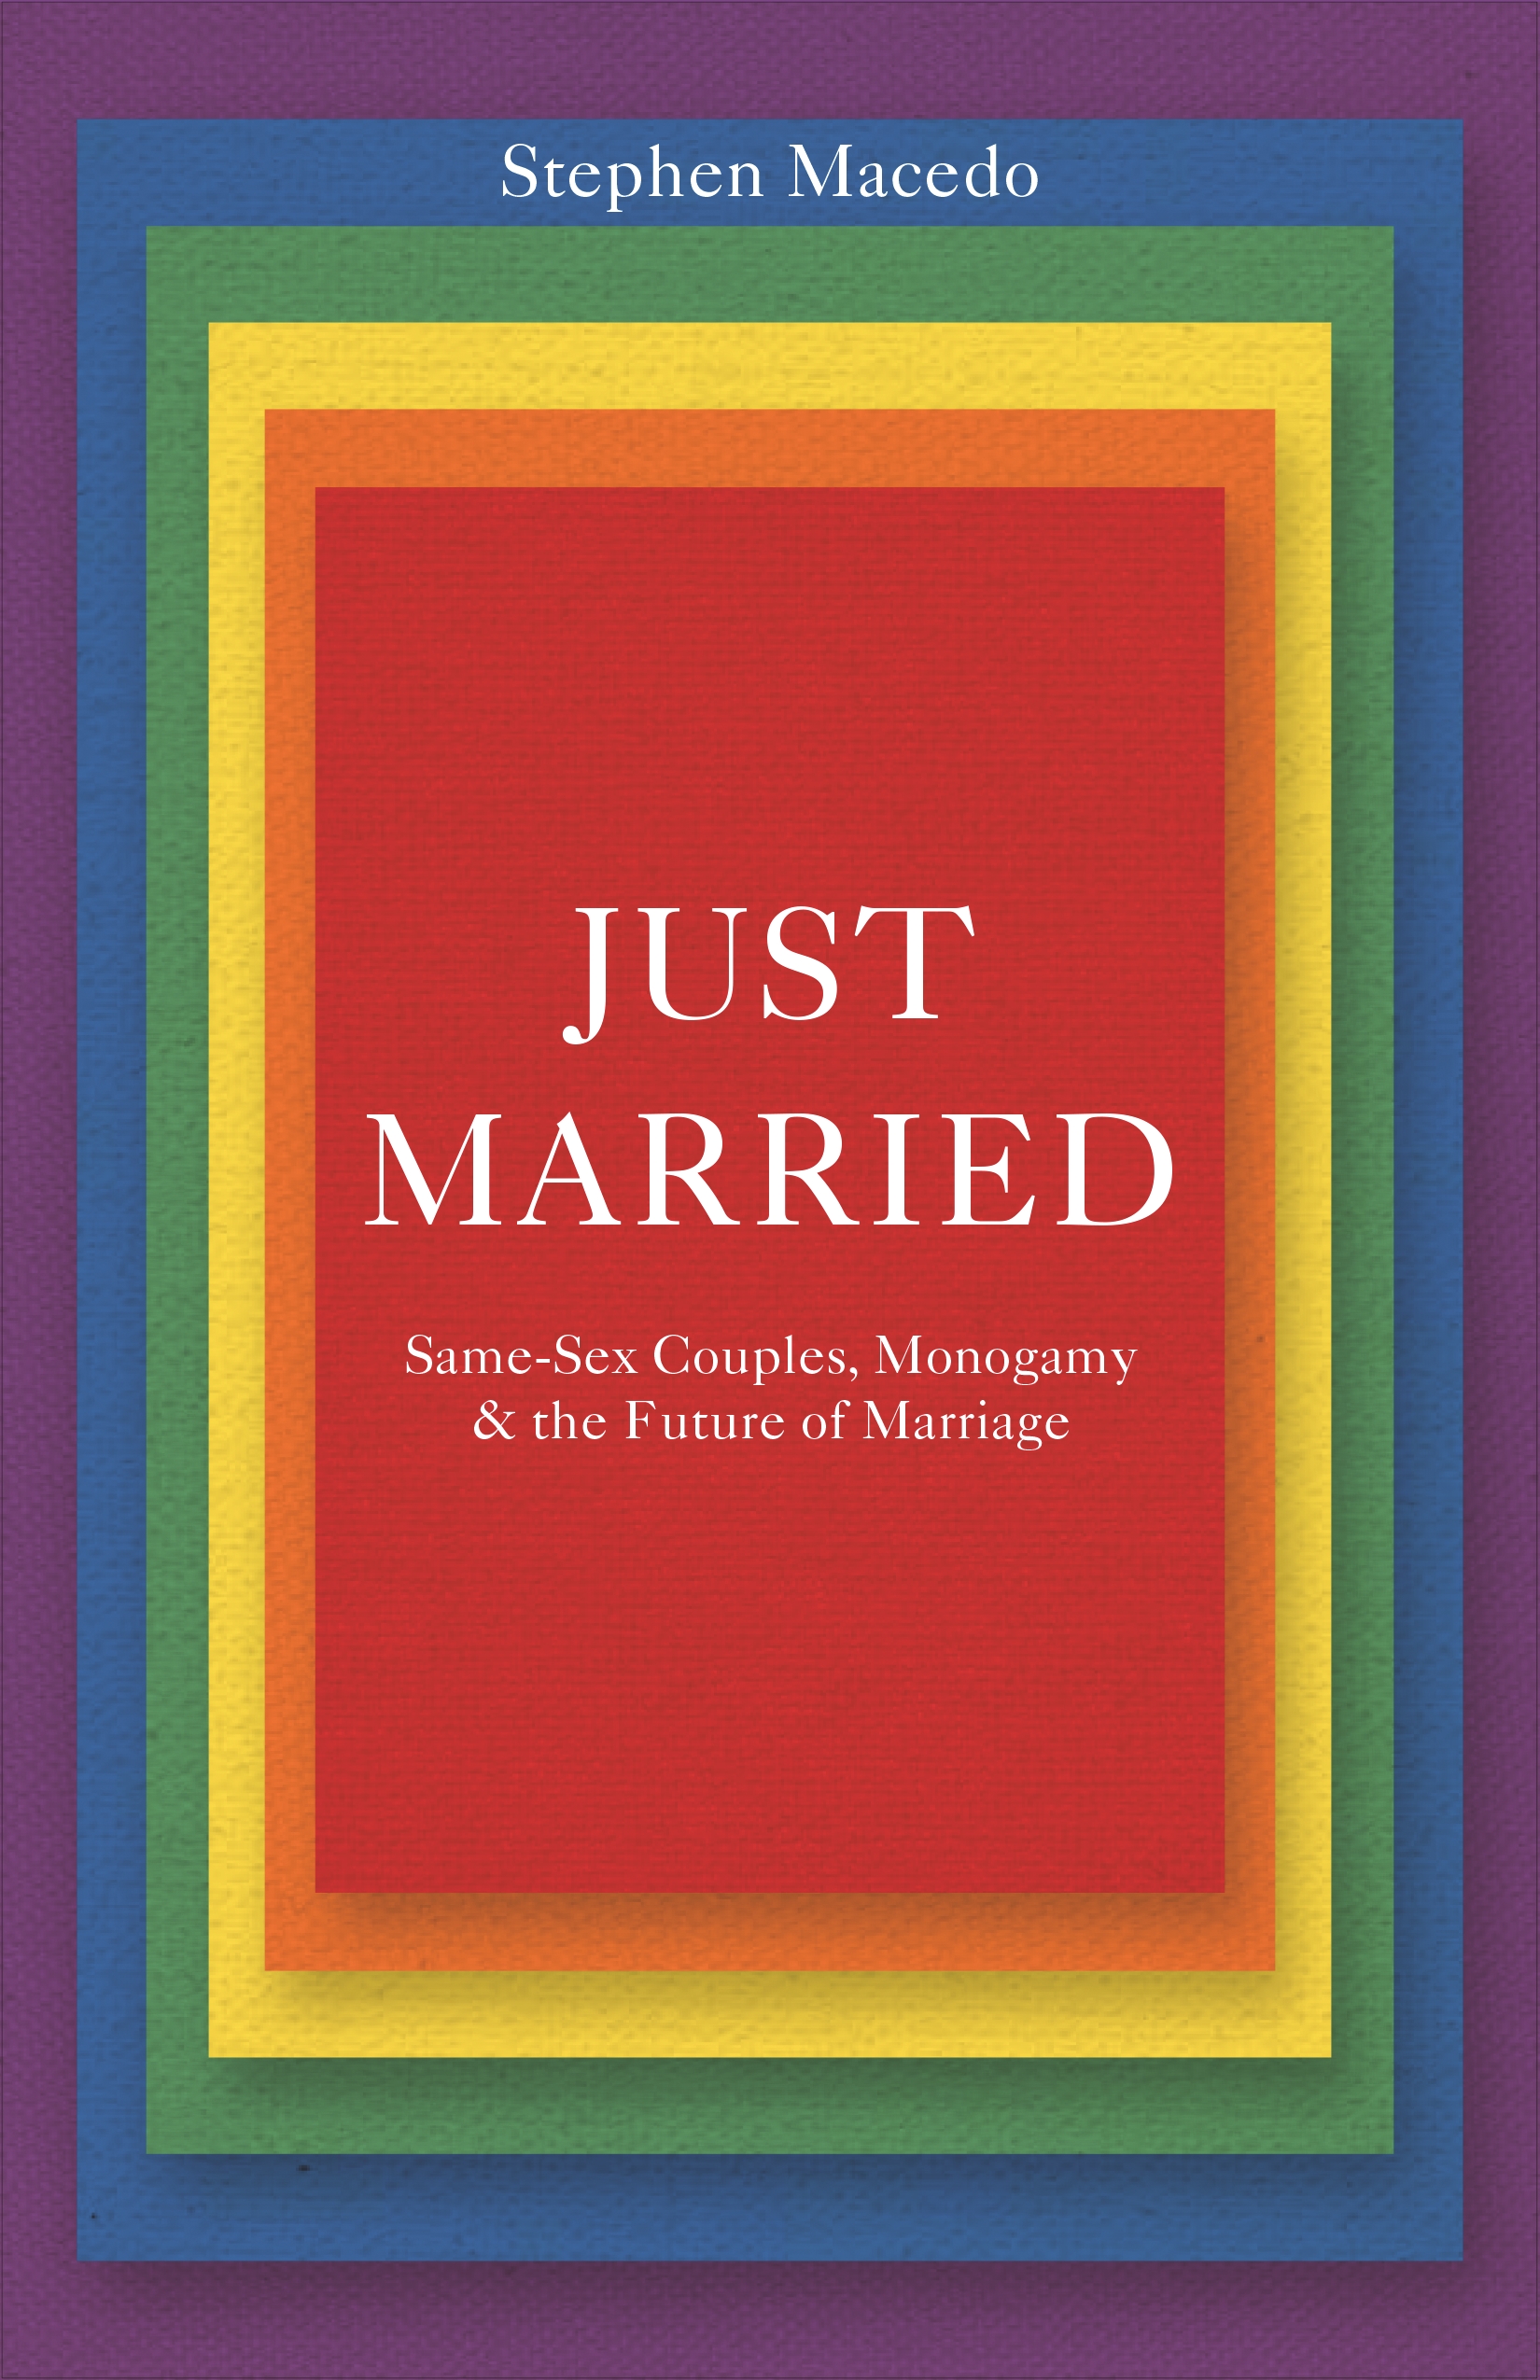 Just Married Princeton University Press image